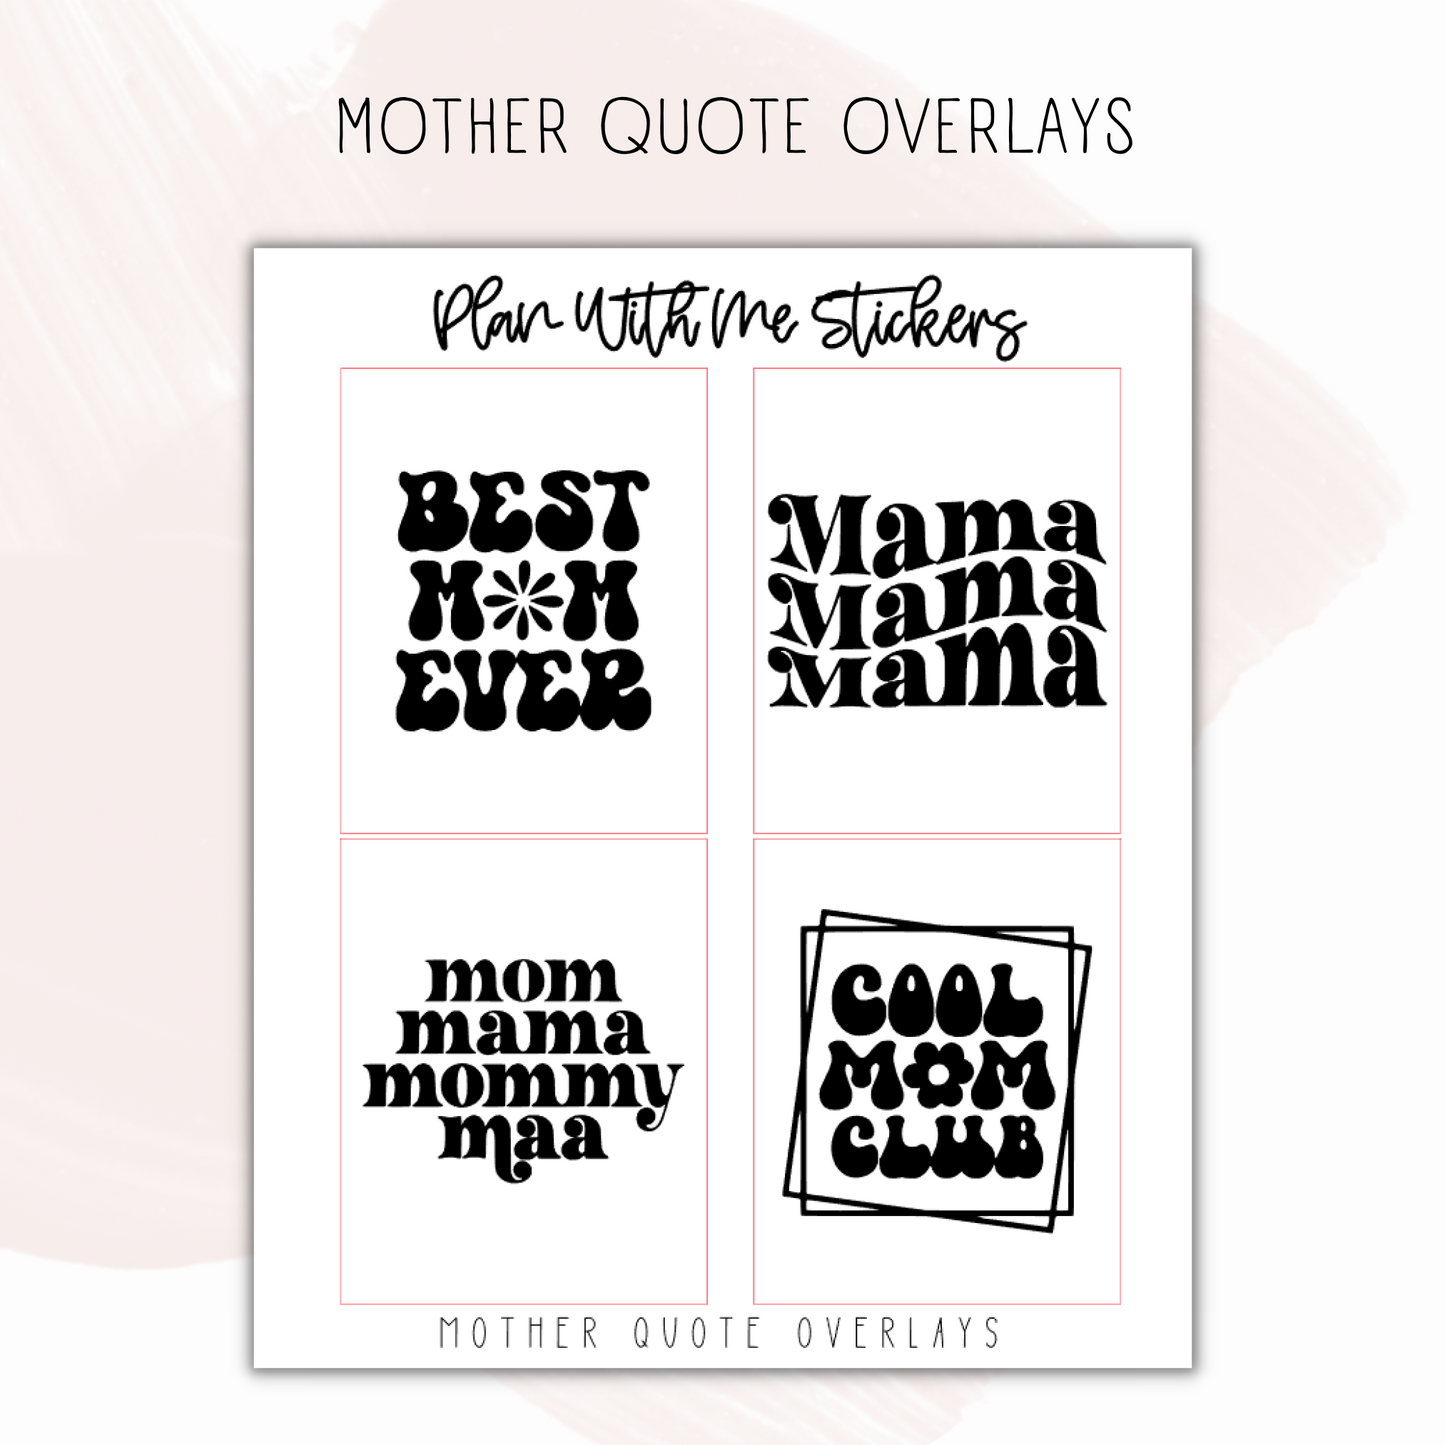 Mother Quote Overlays Vol 1